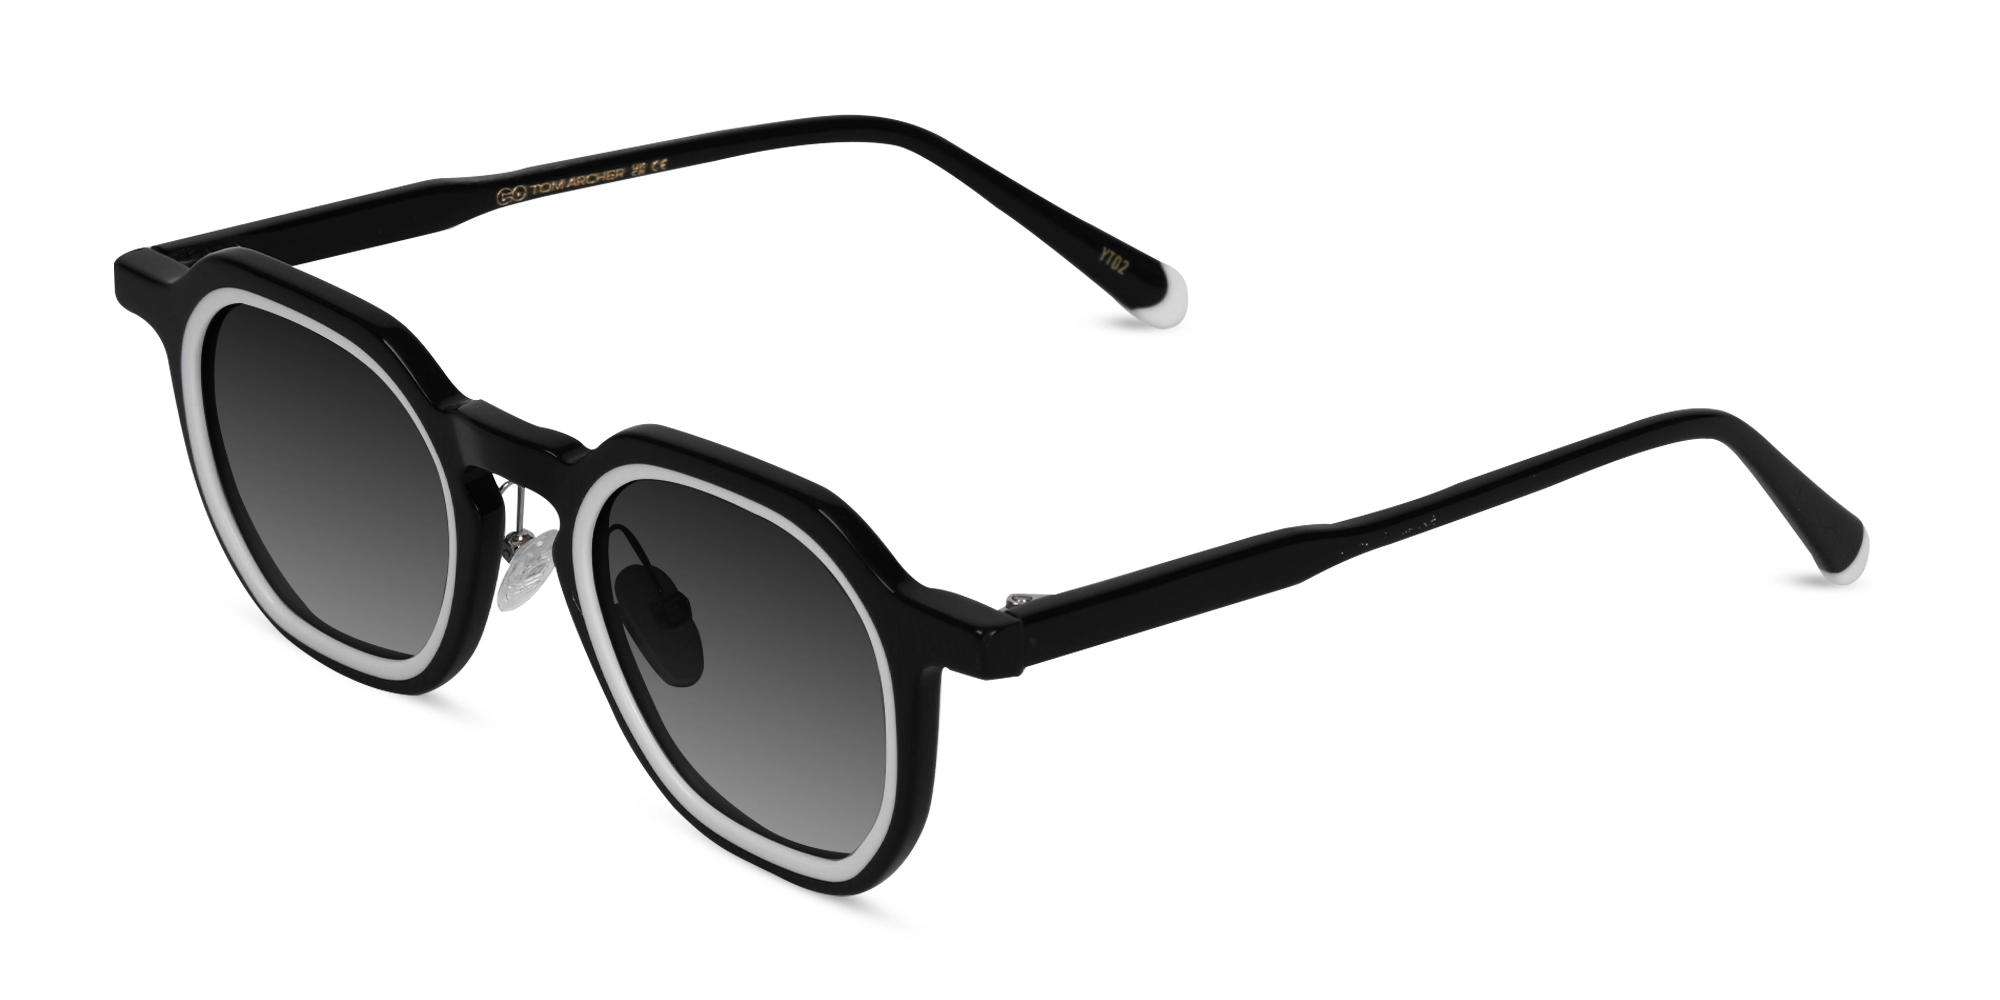 Black And White Designer Sunglasses